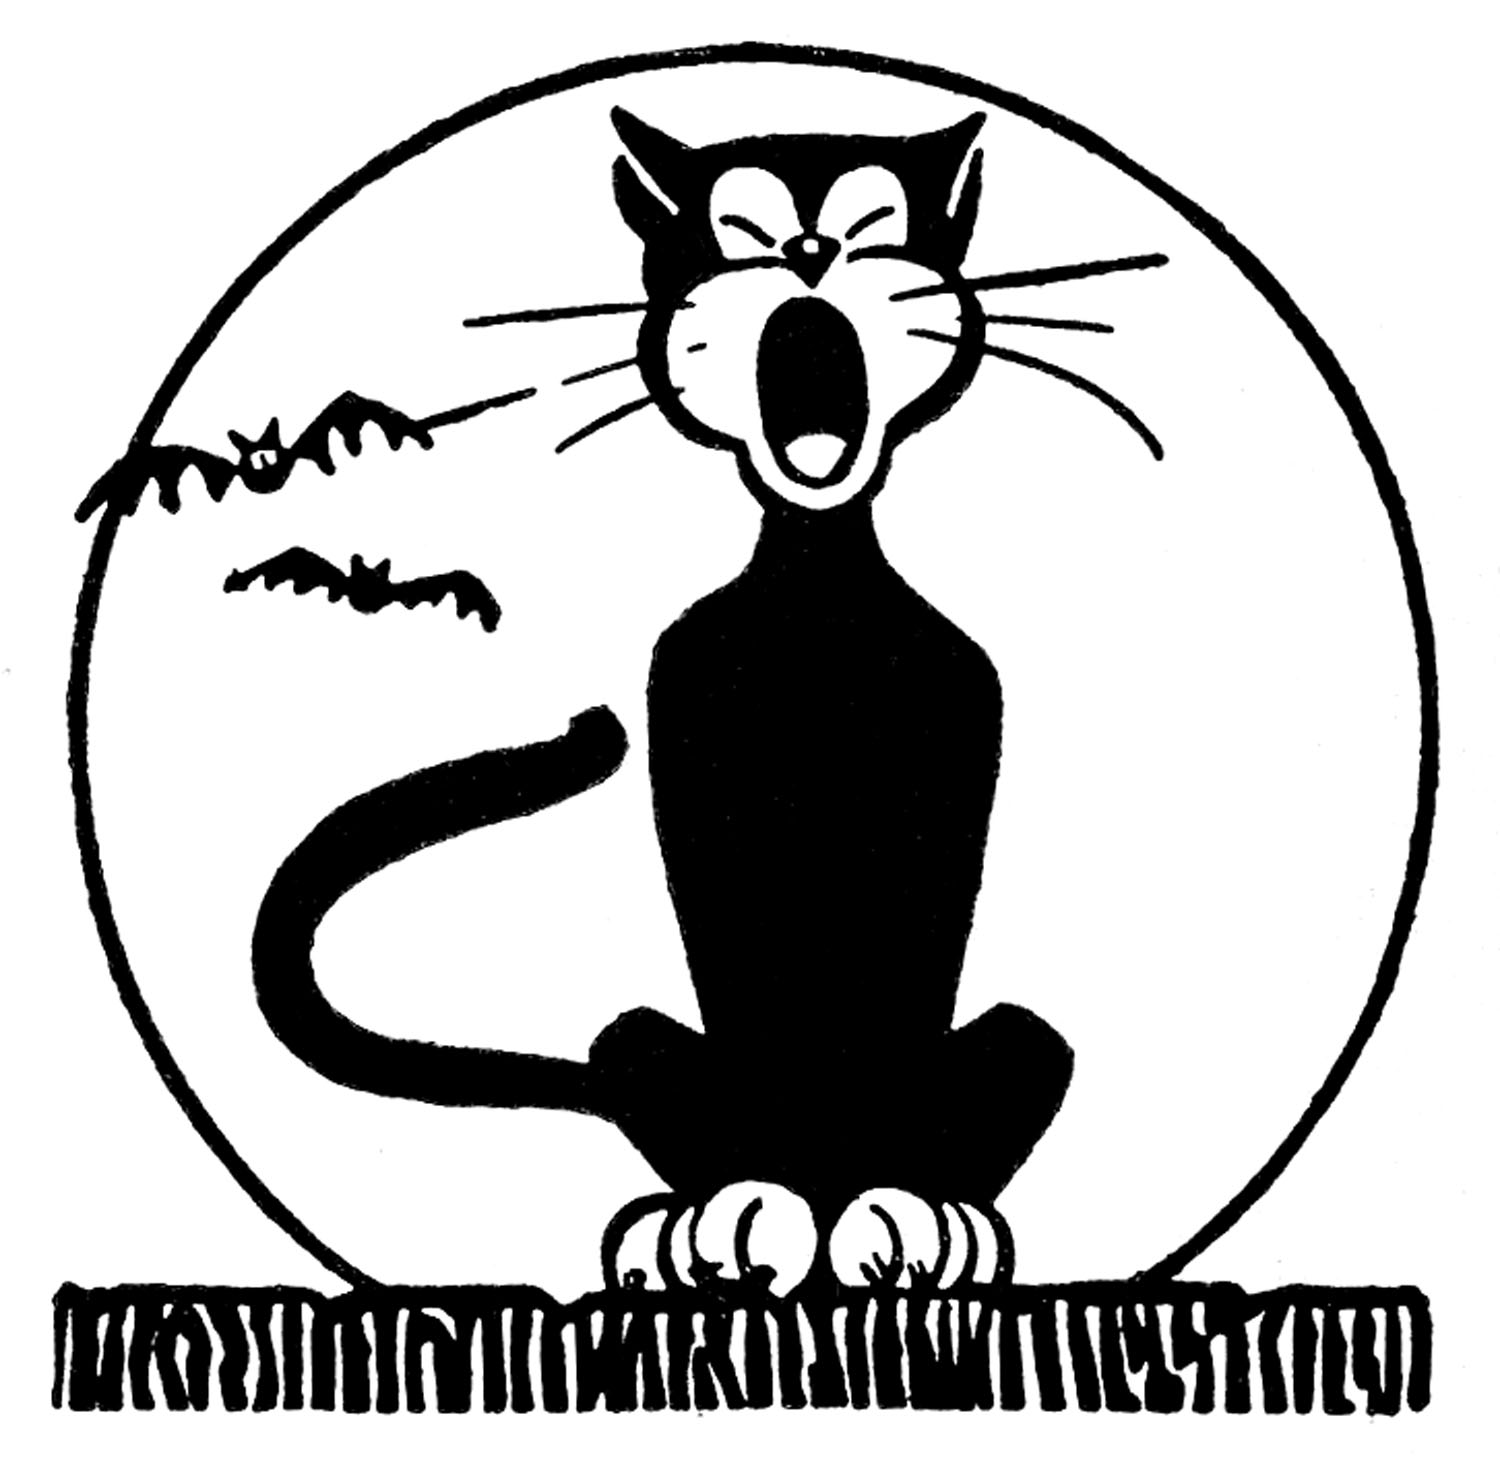 Retro Halloween Clip Art - Black Cat with Moon - The Graphics Fairy